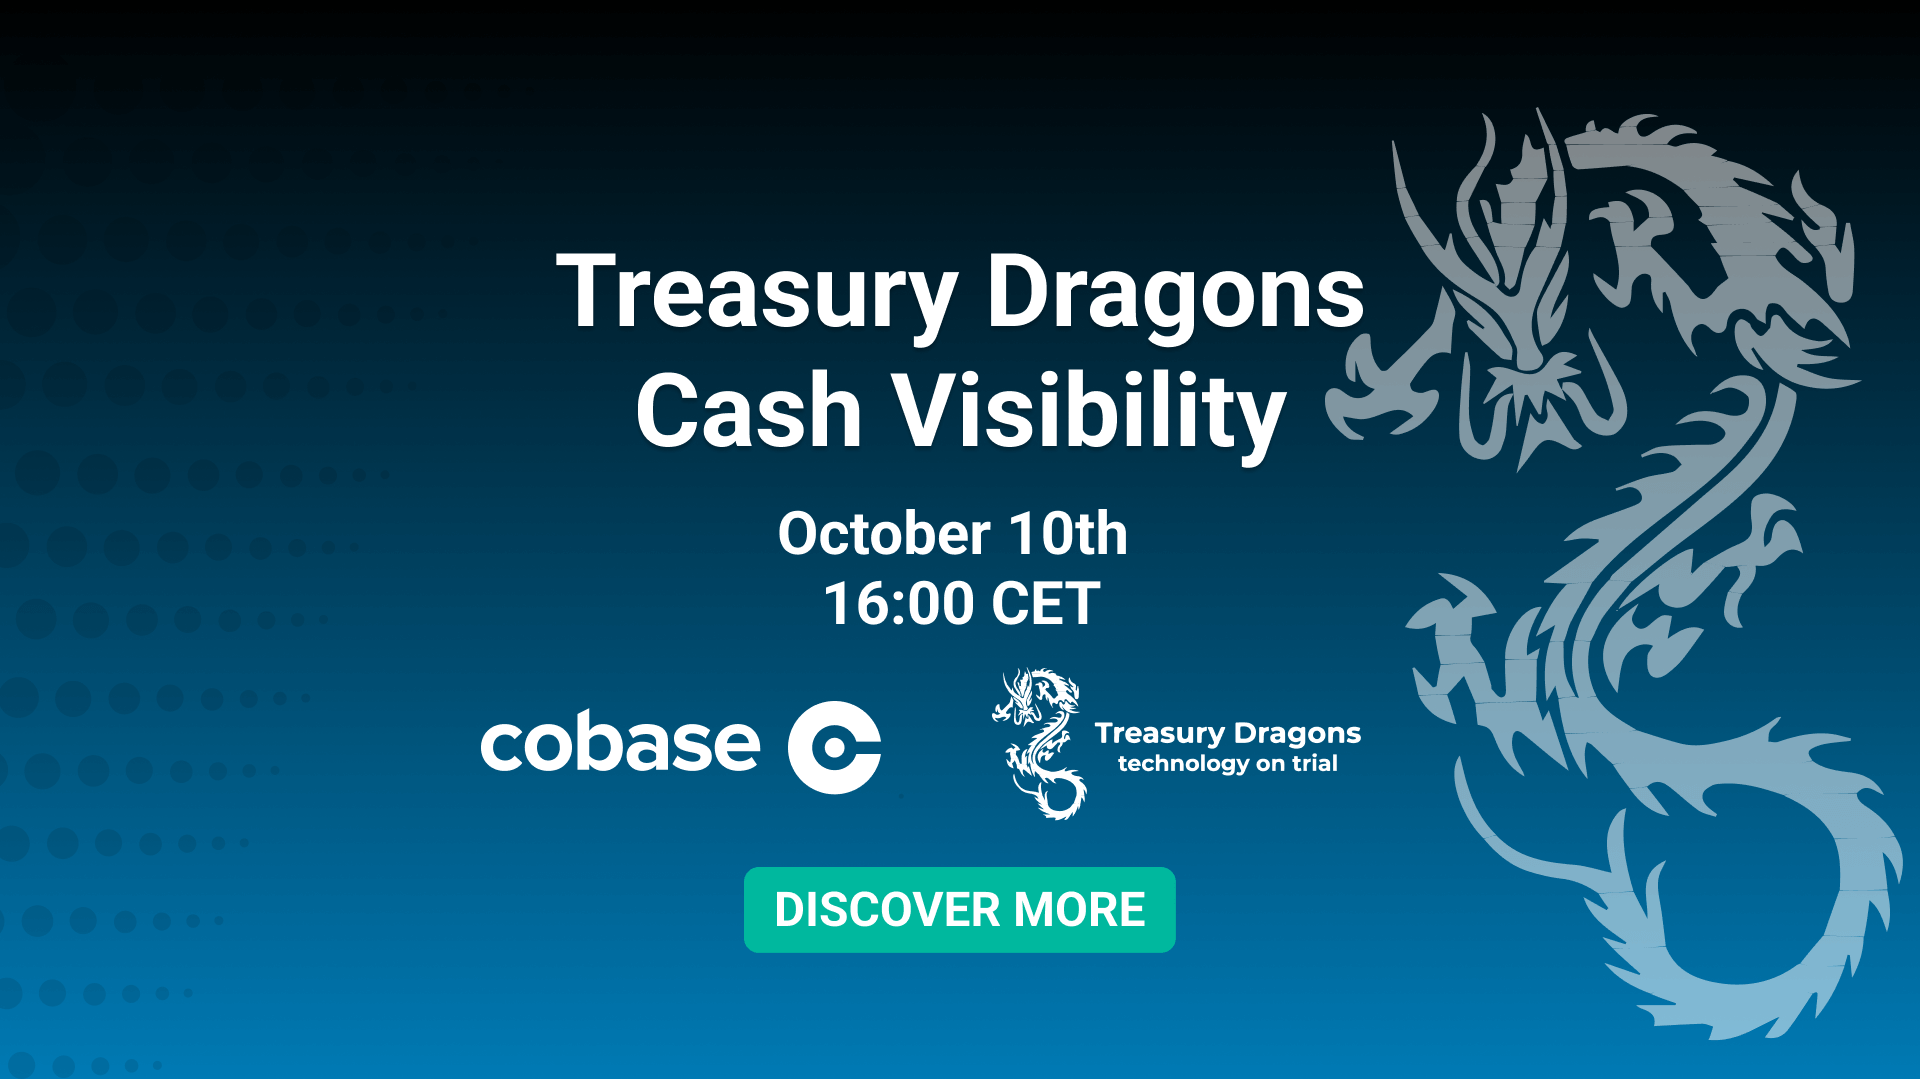 Treasury Dragons Cobase Cash Visibility